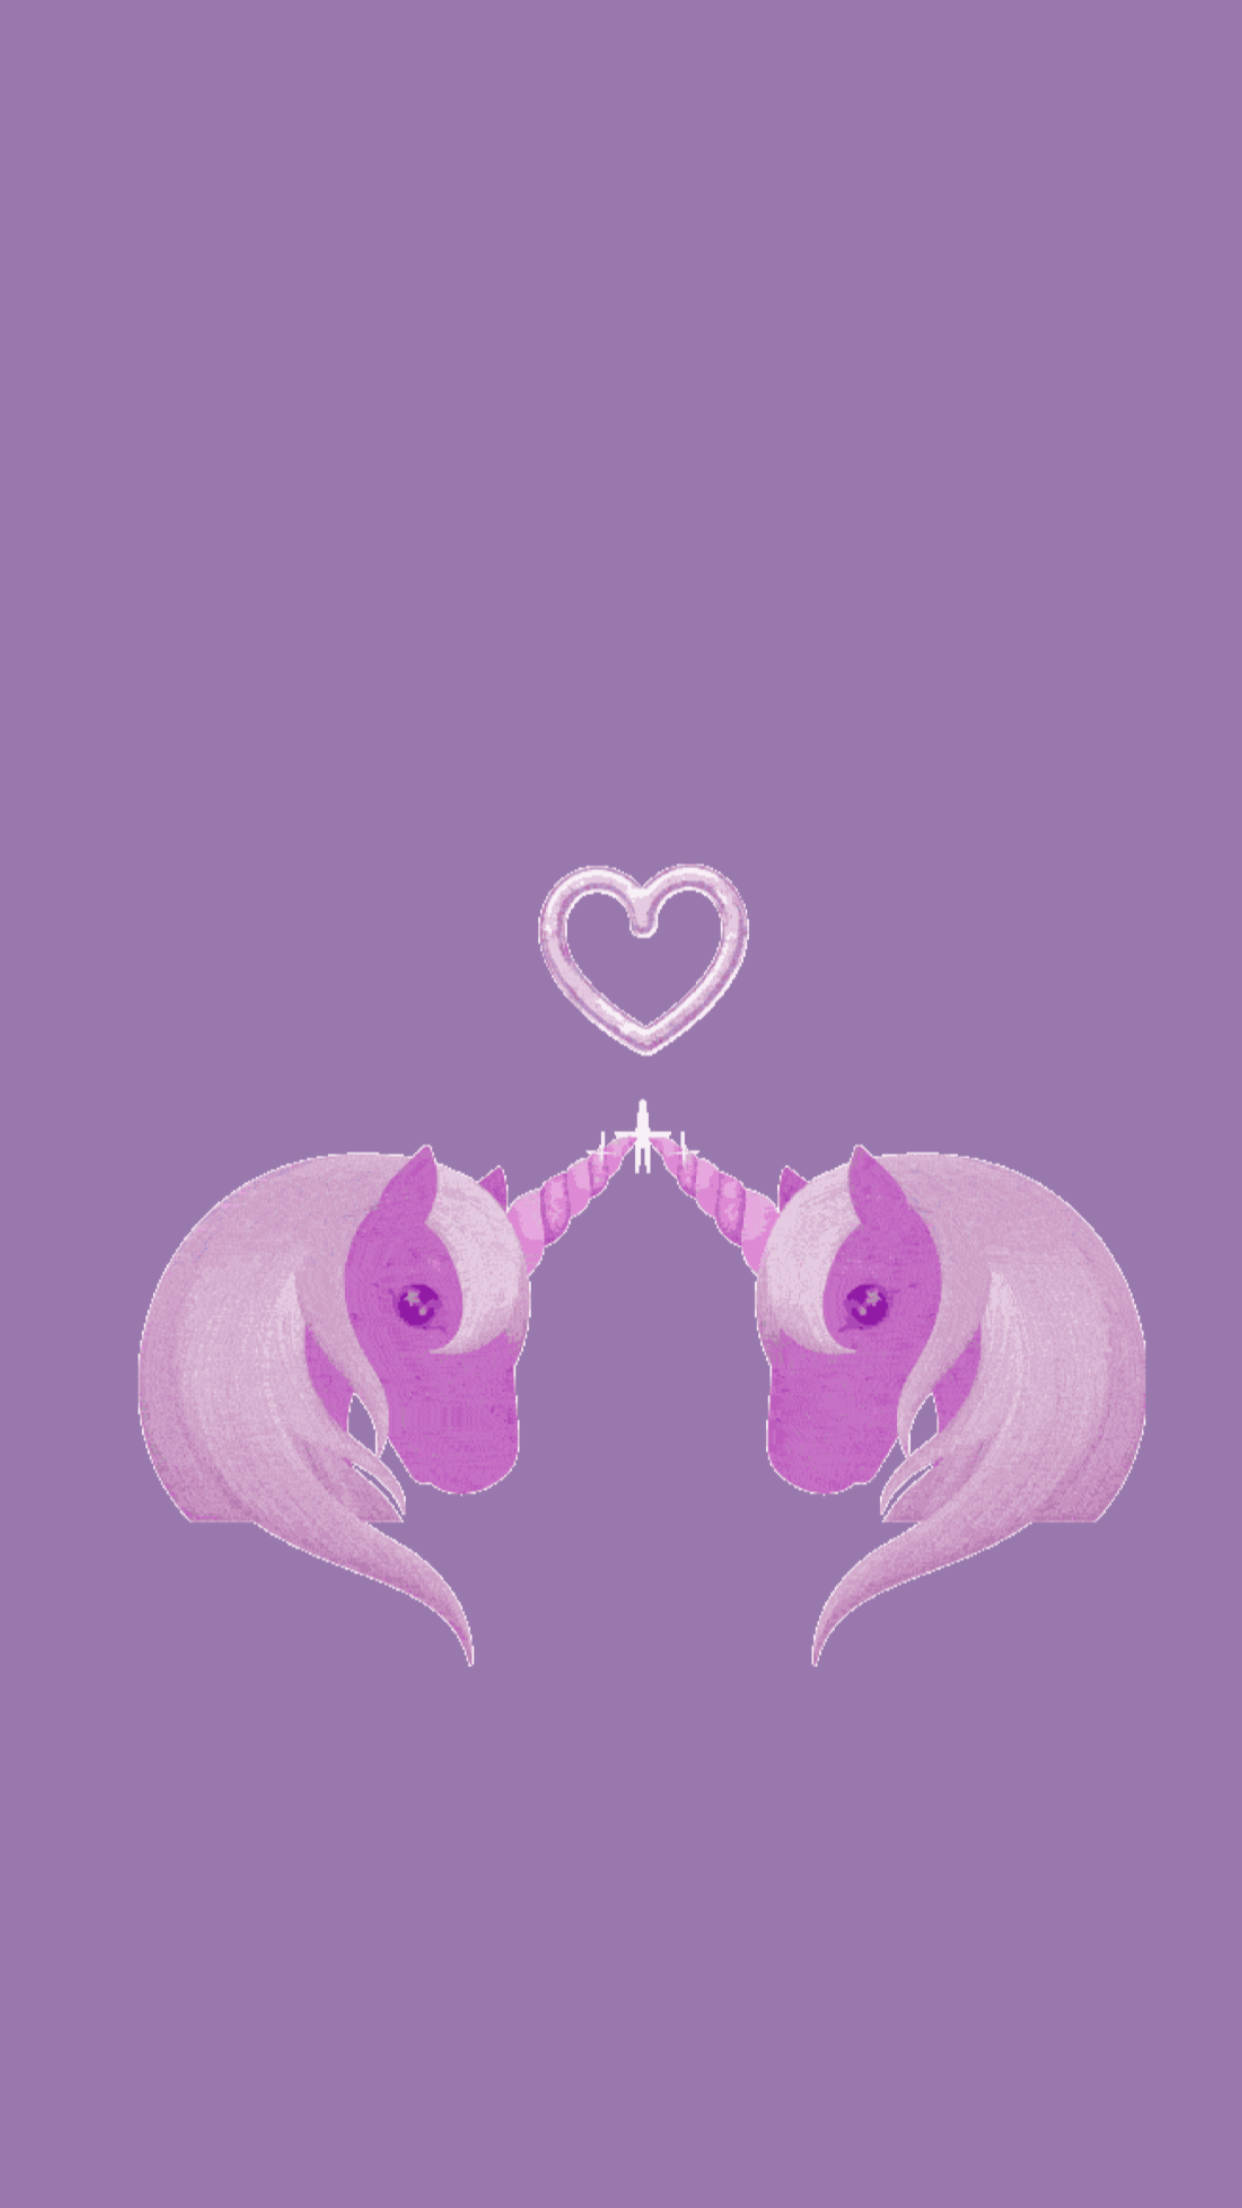 Two Magical Galaxy Unicorn Heart Wallpaper